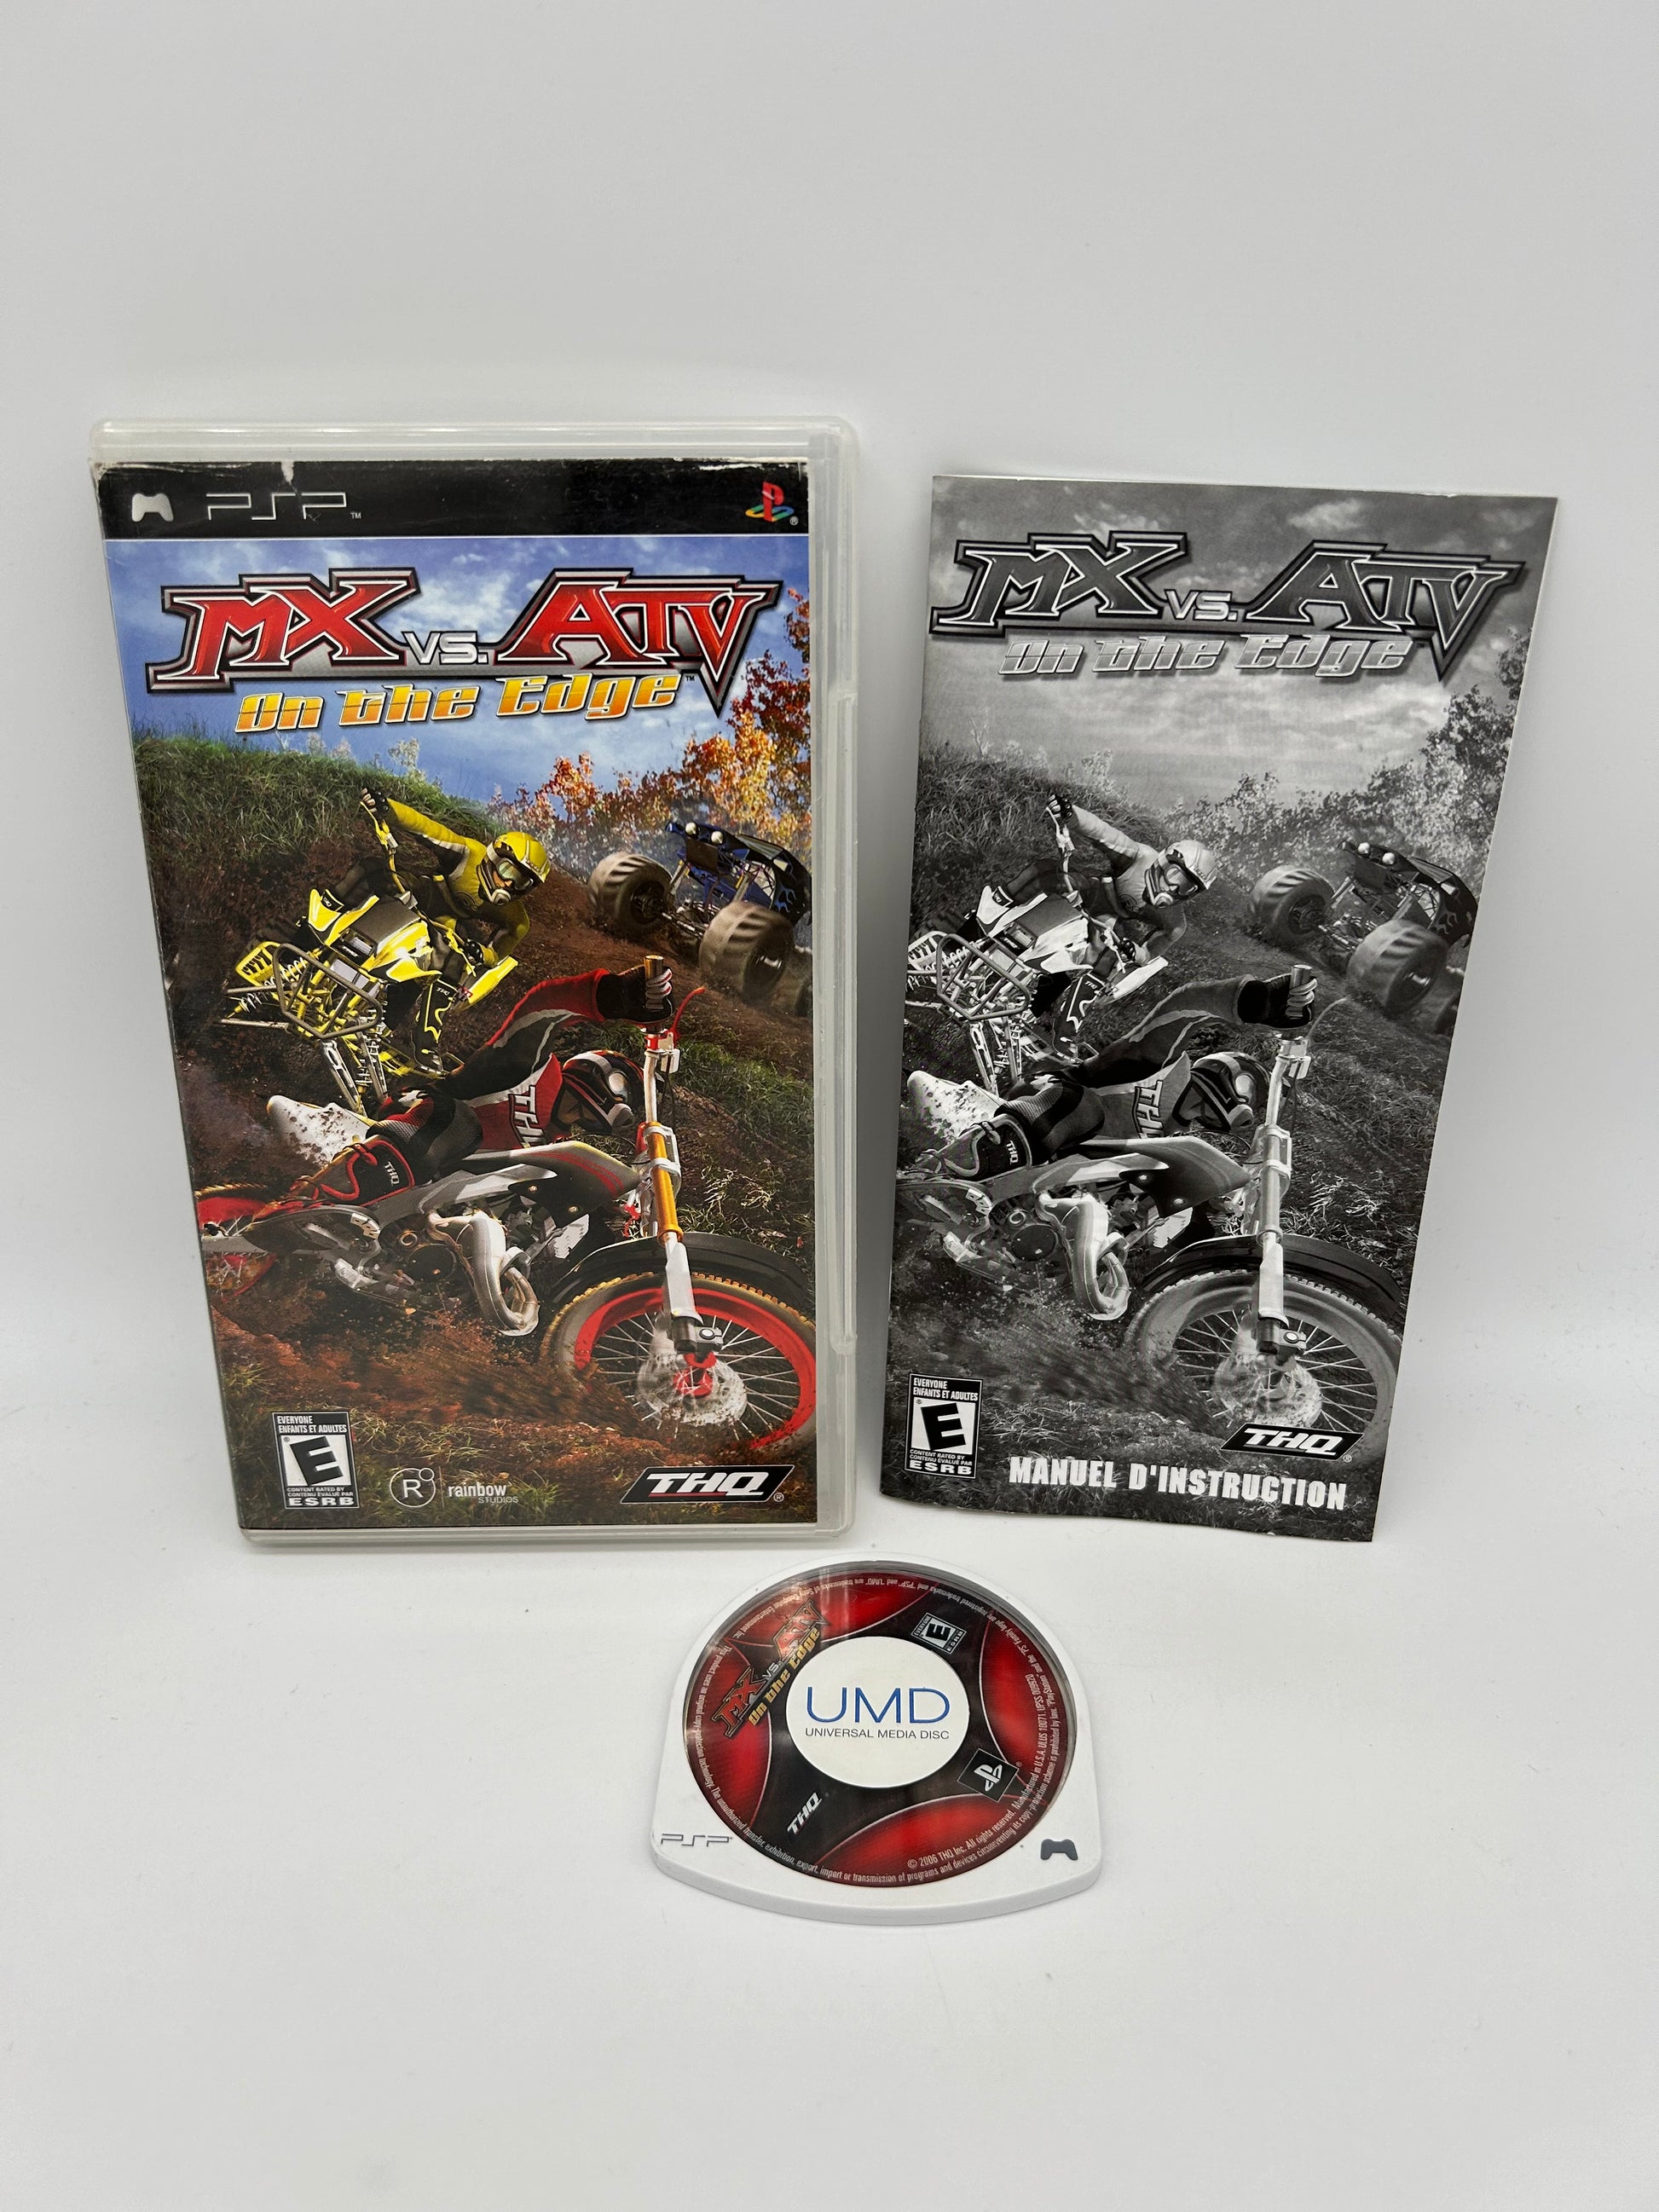 PiXEL-RETRO.COM : SONY PLAYSTATION PORTABLE (PSP) OCOMPLET CIB BOX MANUAL GAME NTSC MX VS ATV UNLEASHED ON THE EDGE